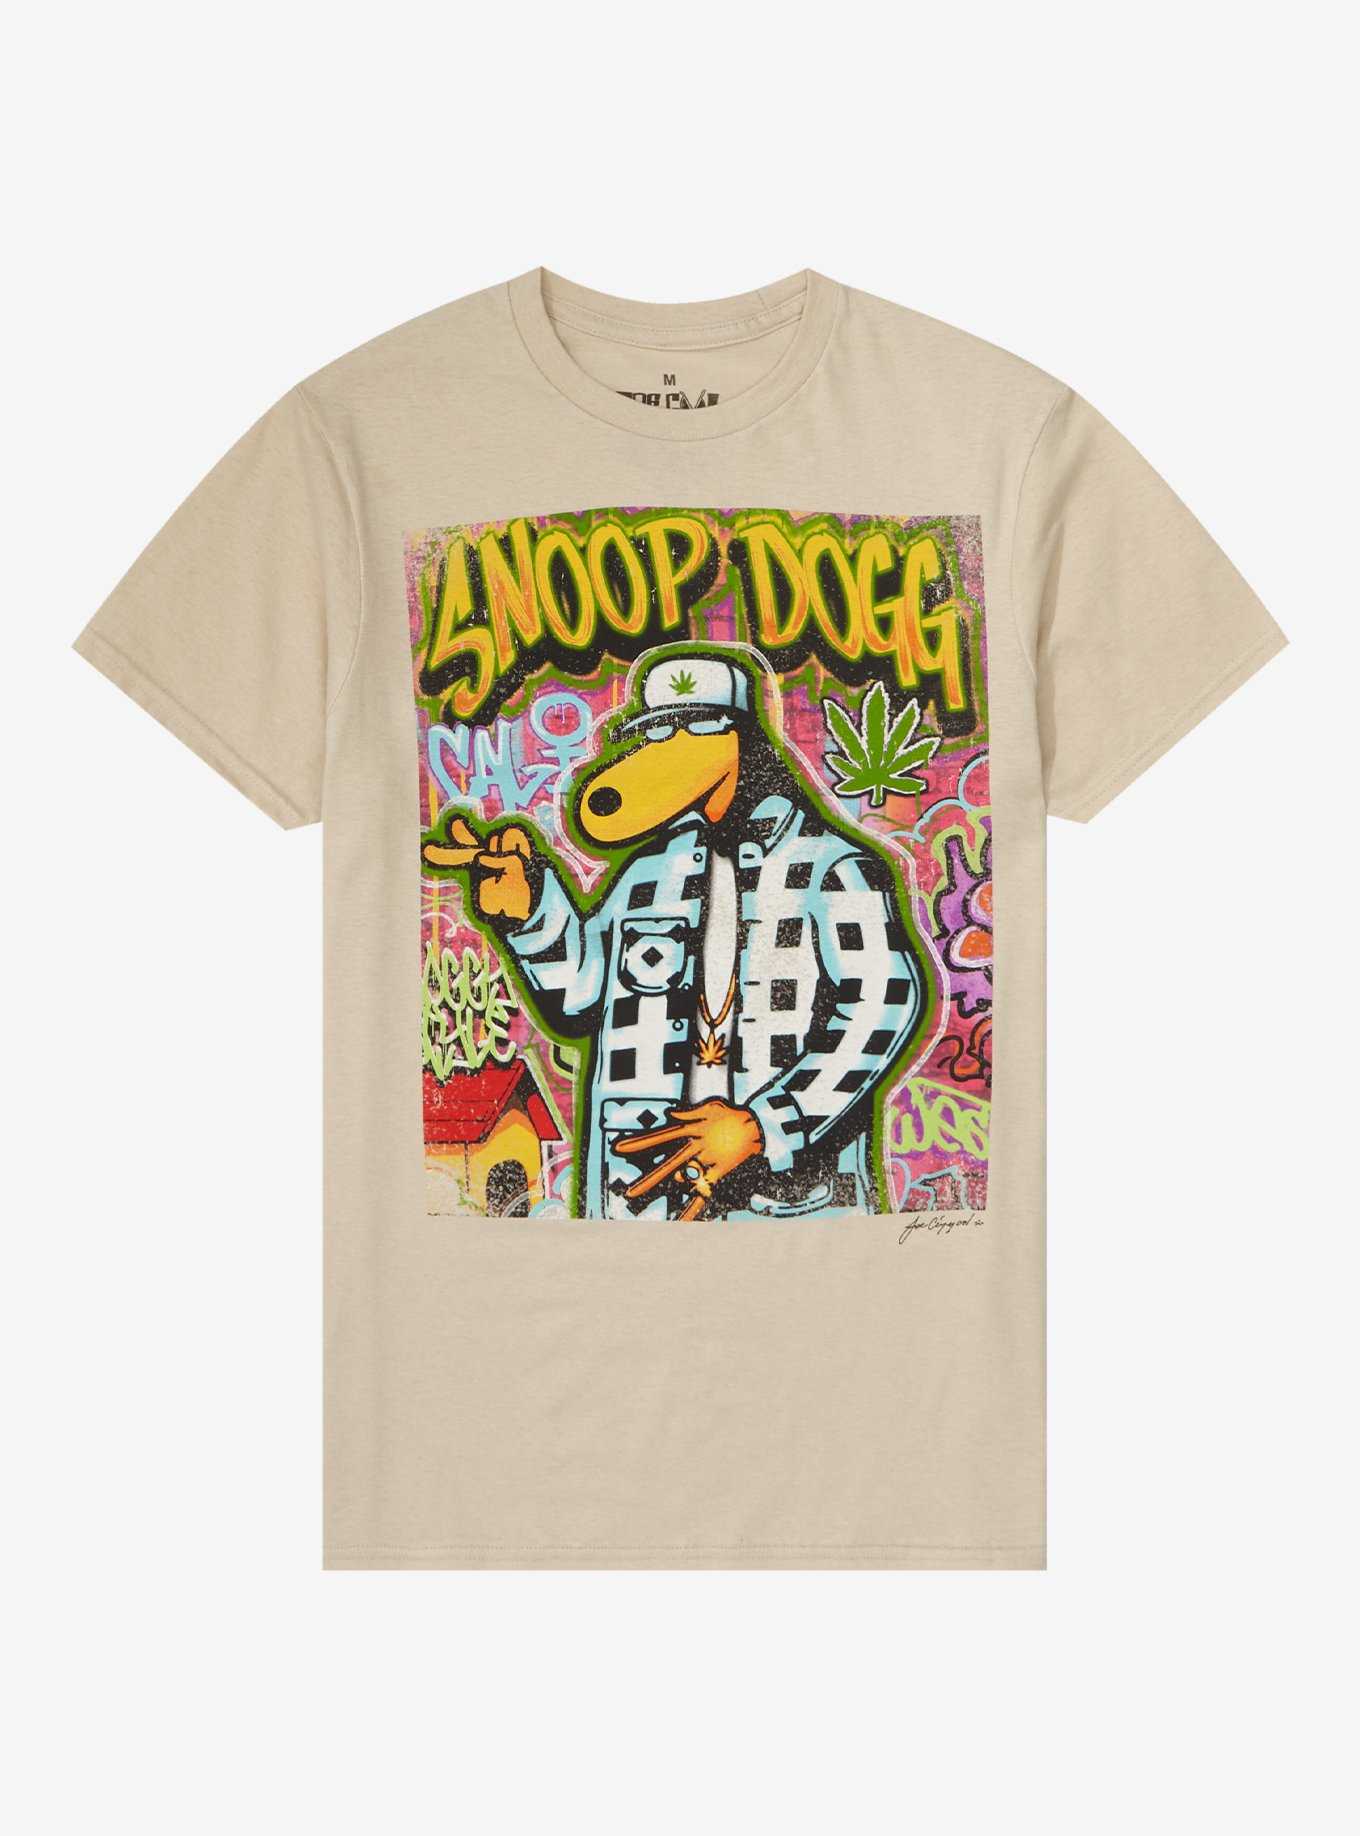 Snoop Dogg Graffiti Boyfriend Fit Girls T-Shirt, , hi-res